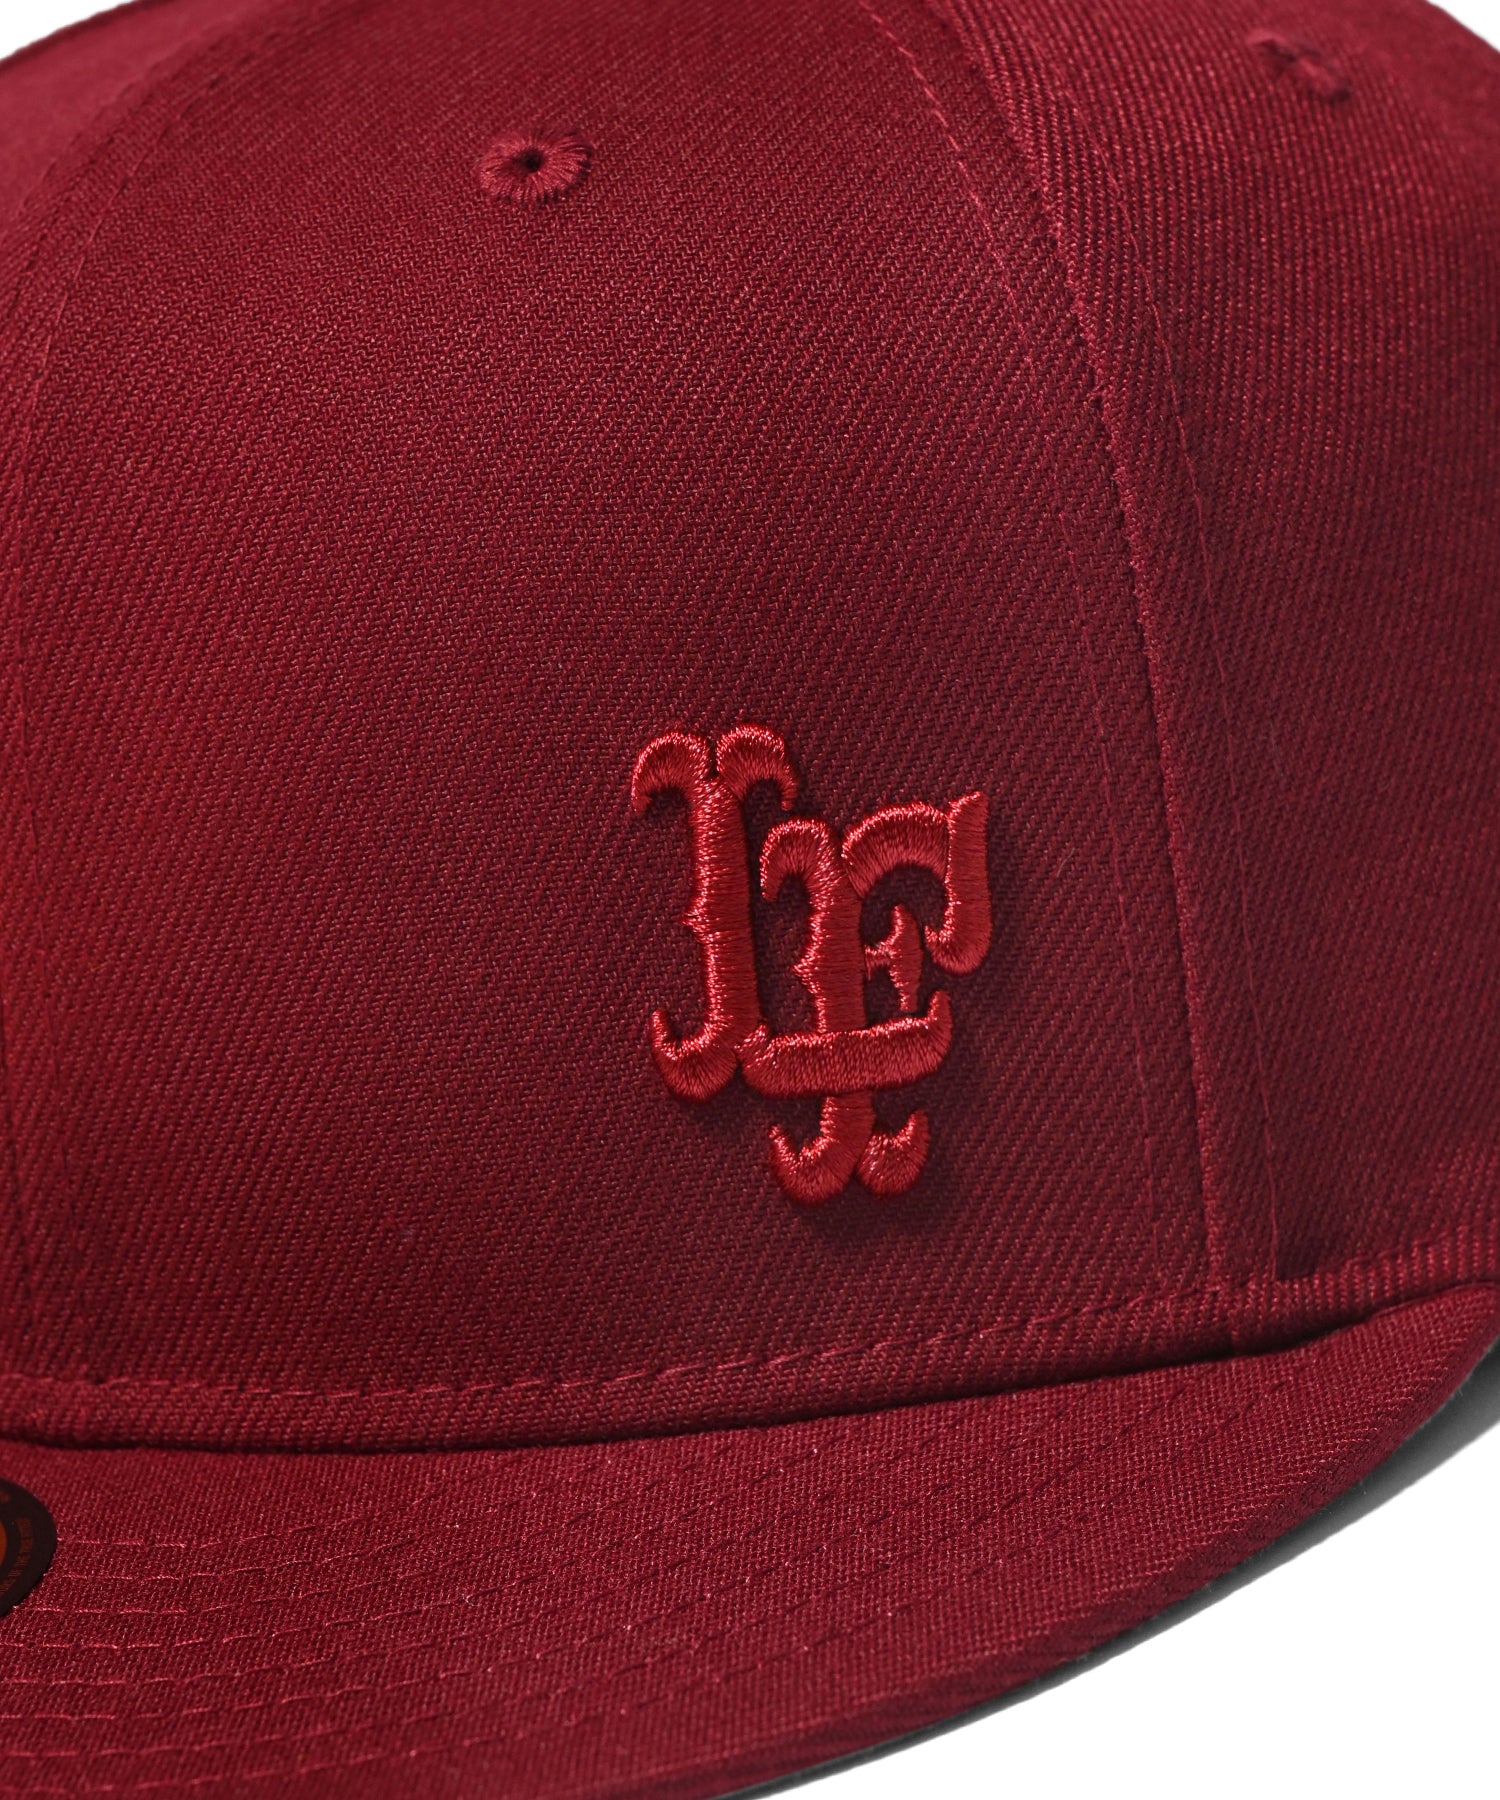 LFYT x New Era Mini LF Logo 59fifty Fitted Hat